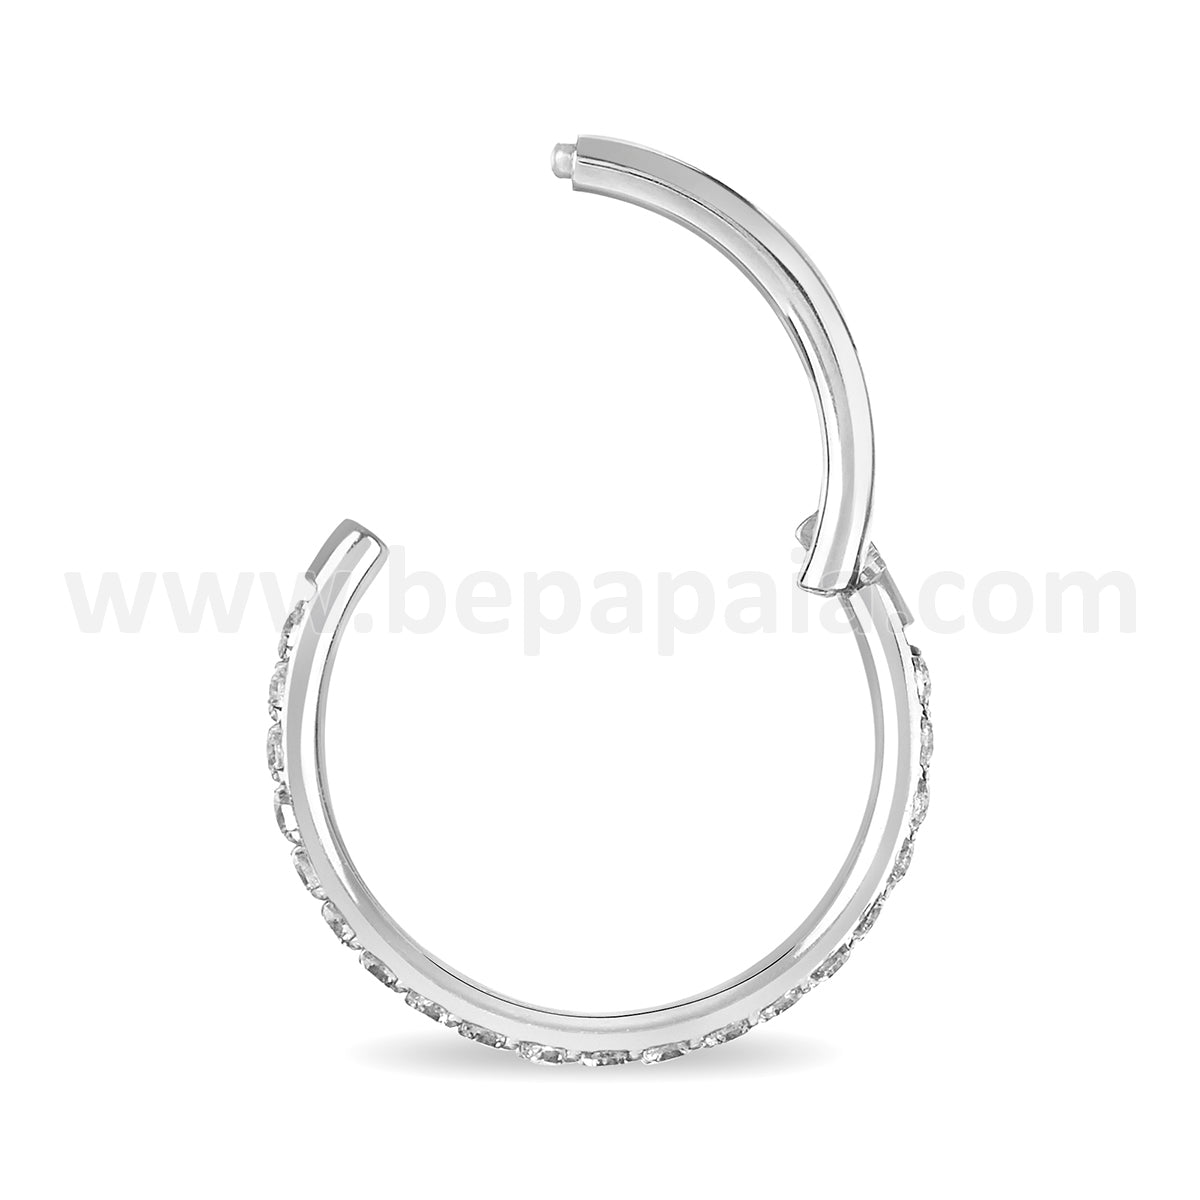 Titanium hinged segment ring with gems